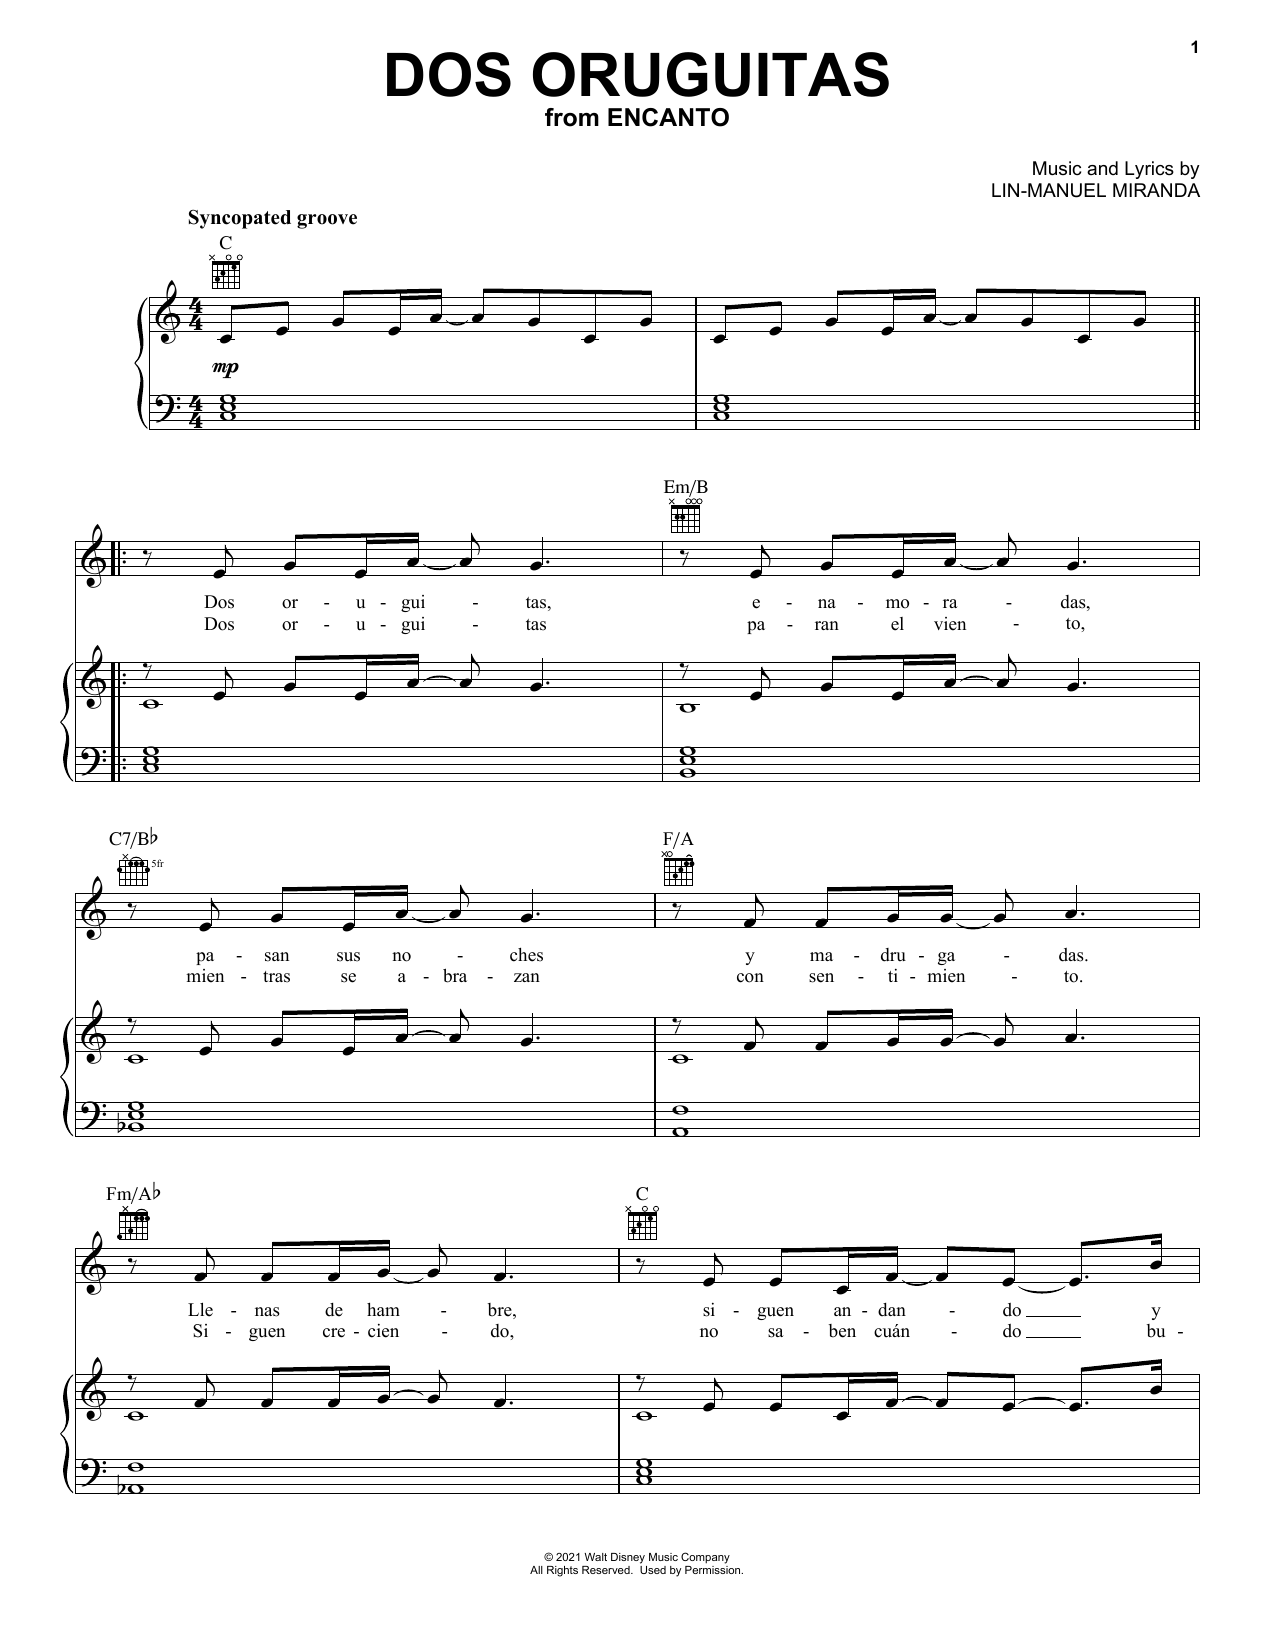 Lin-Manuel Miranda Dos Oruguitas (from Encanto) Sheet Music Notes & Chords for Viola Solo - Download or Print PDF